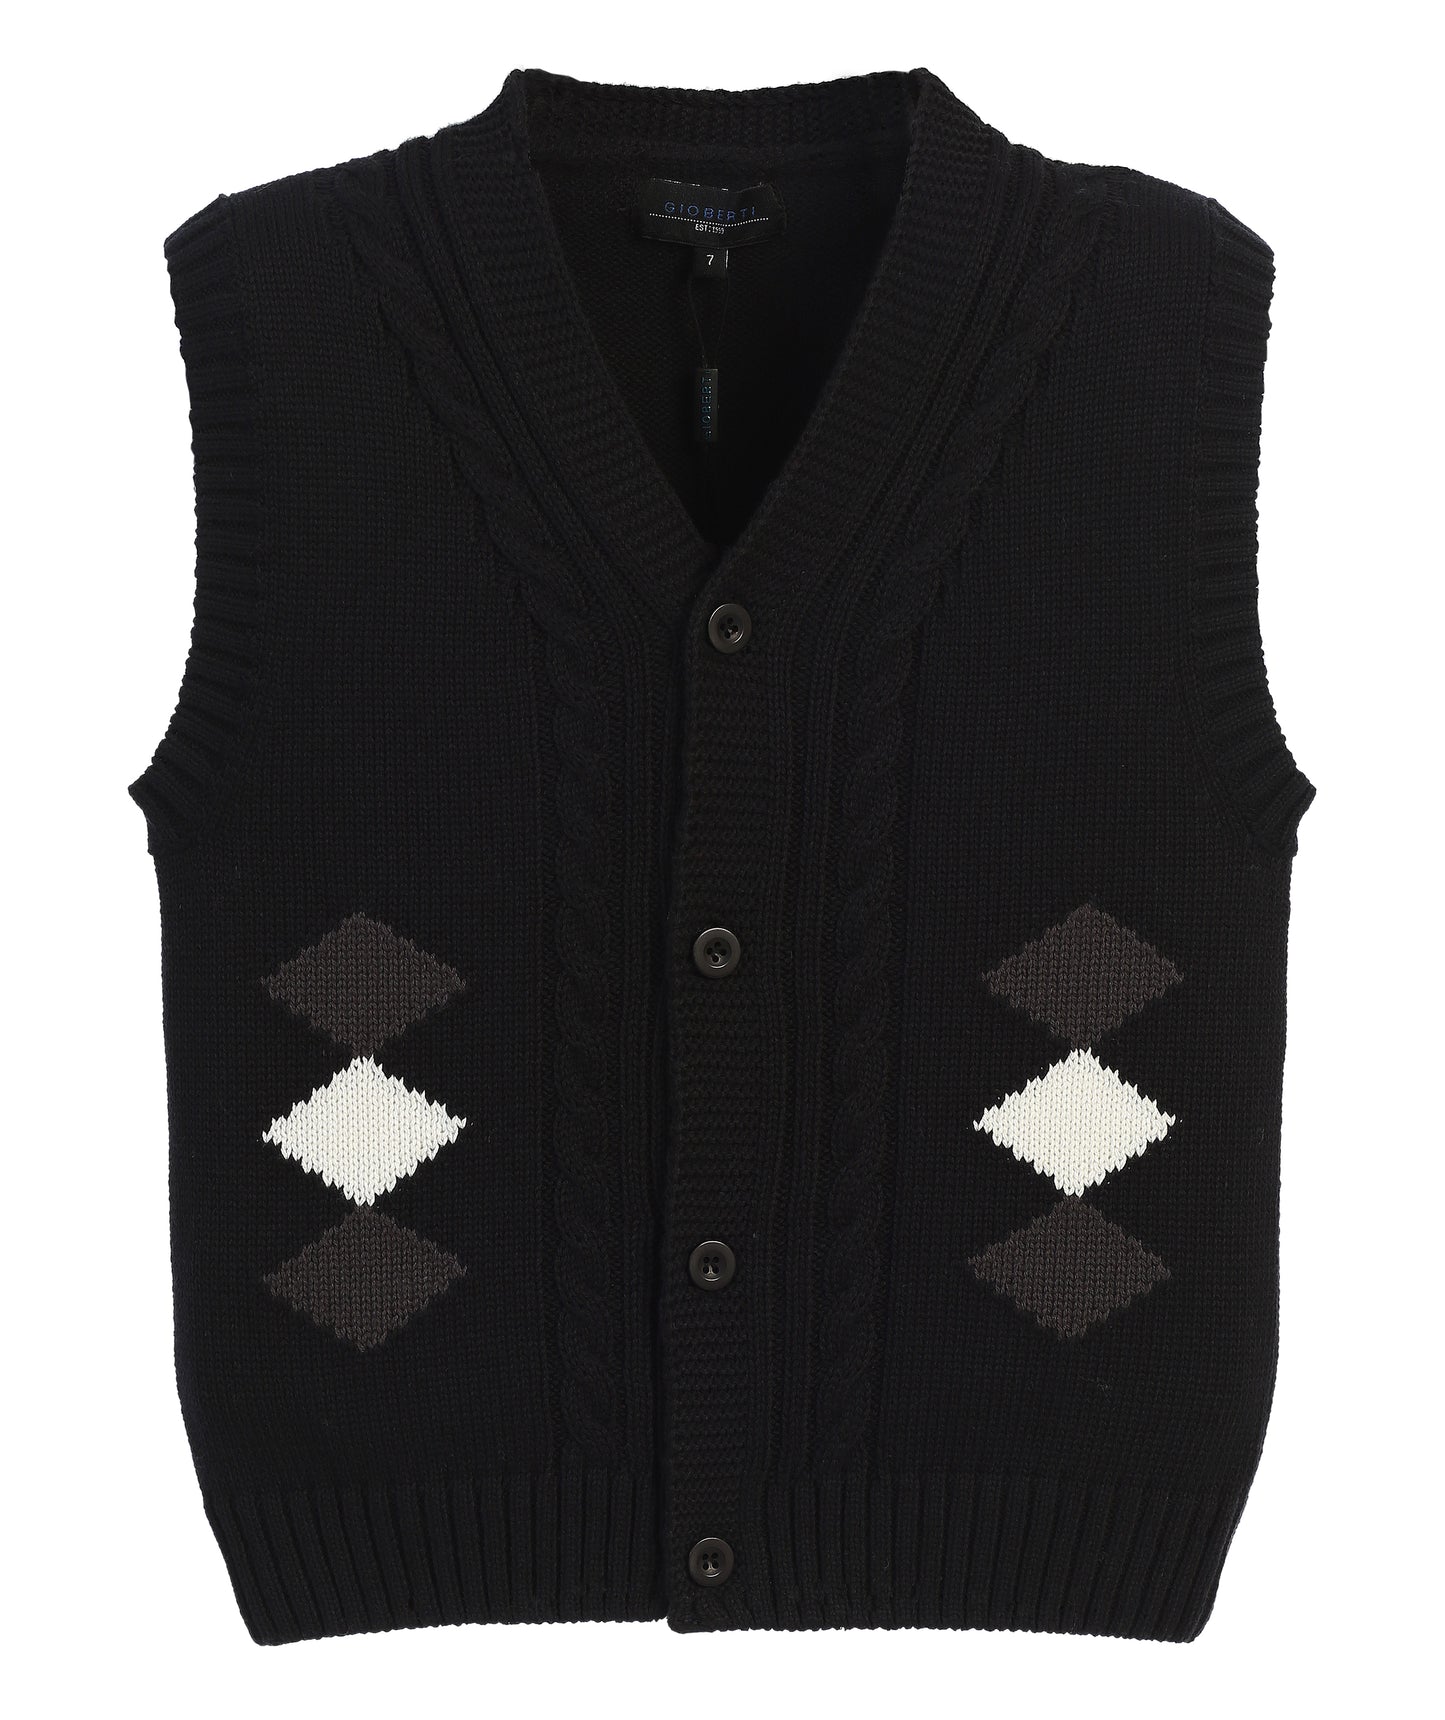 Diamond Print Knitted Vest 100% Cotton - Black